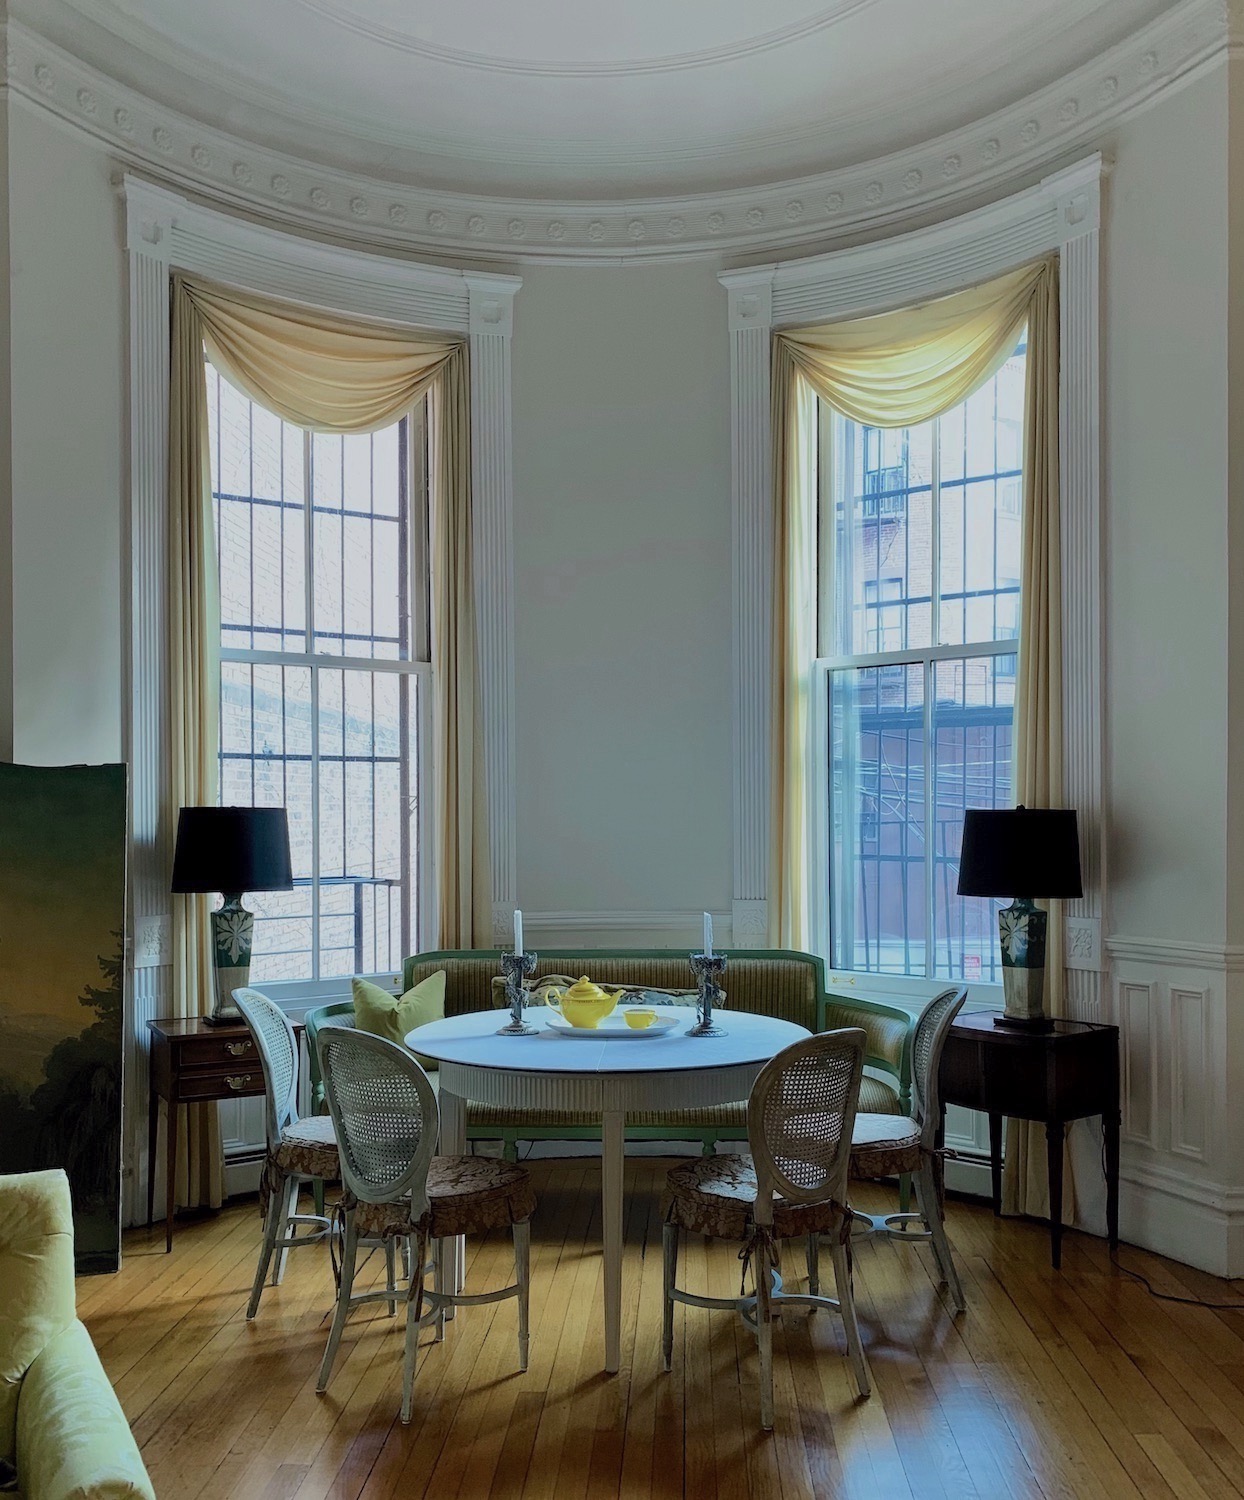 My Boston apartment dining area new table pad - November 2021 golden oak floors